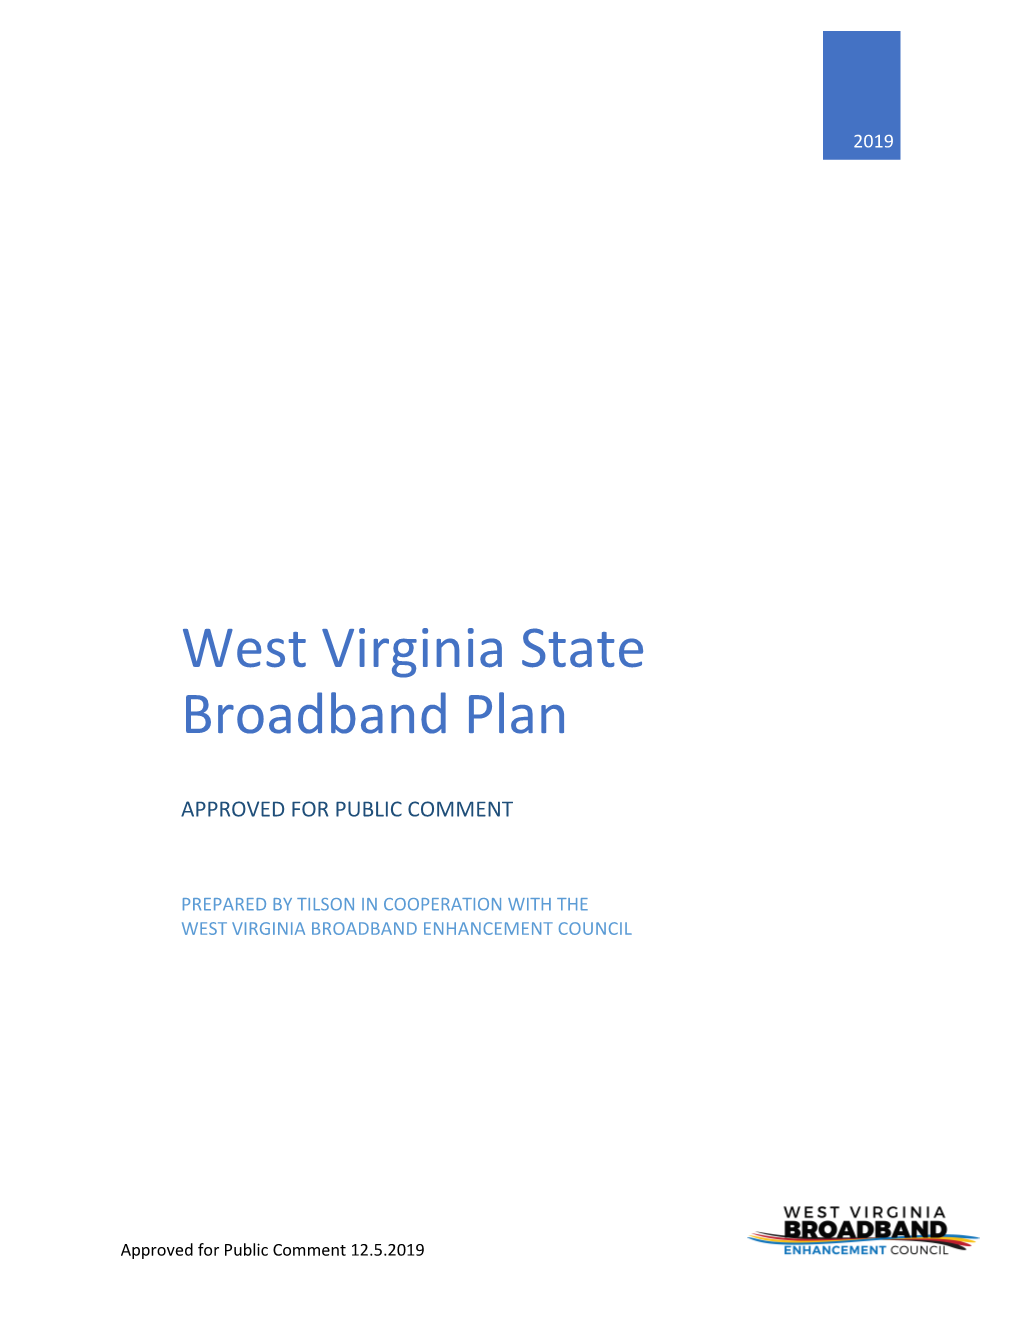 West Virginia State Broadband Plan